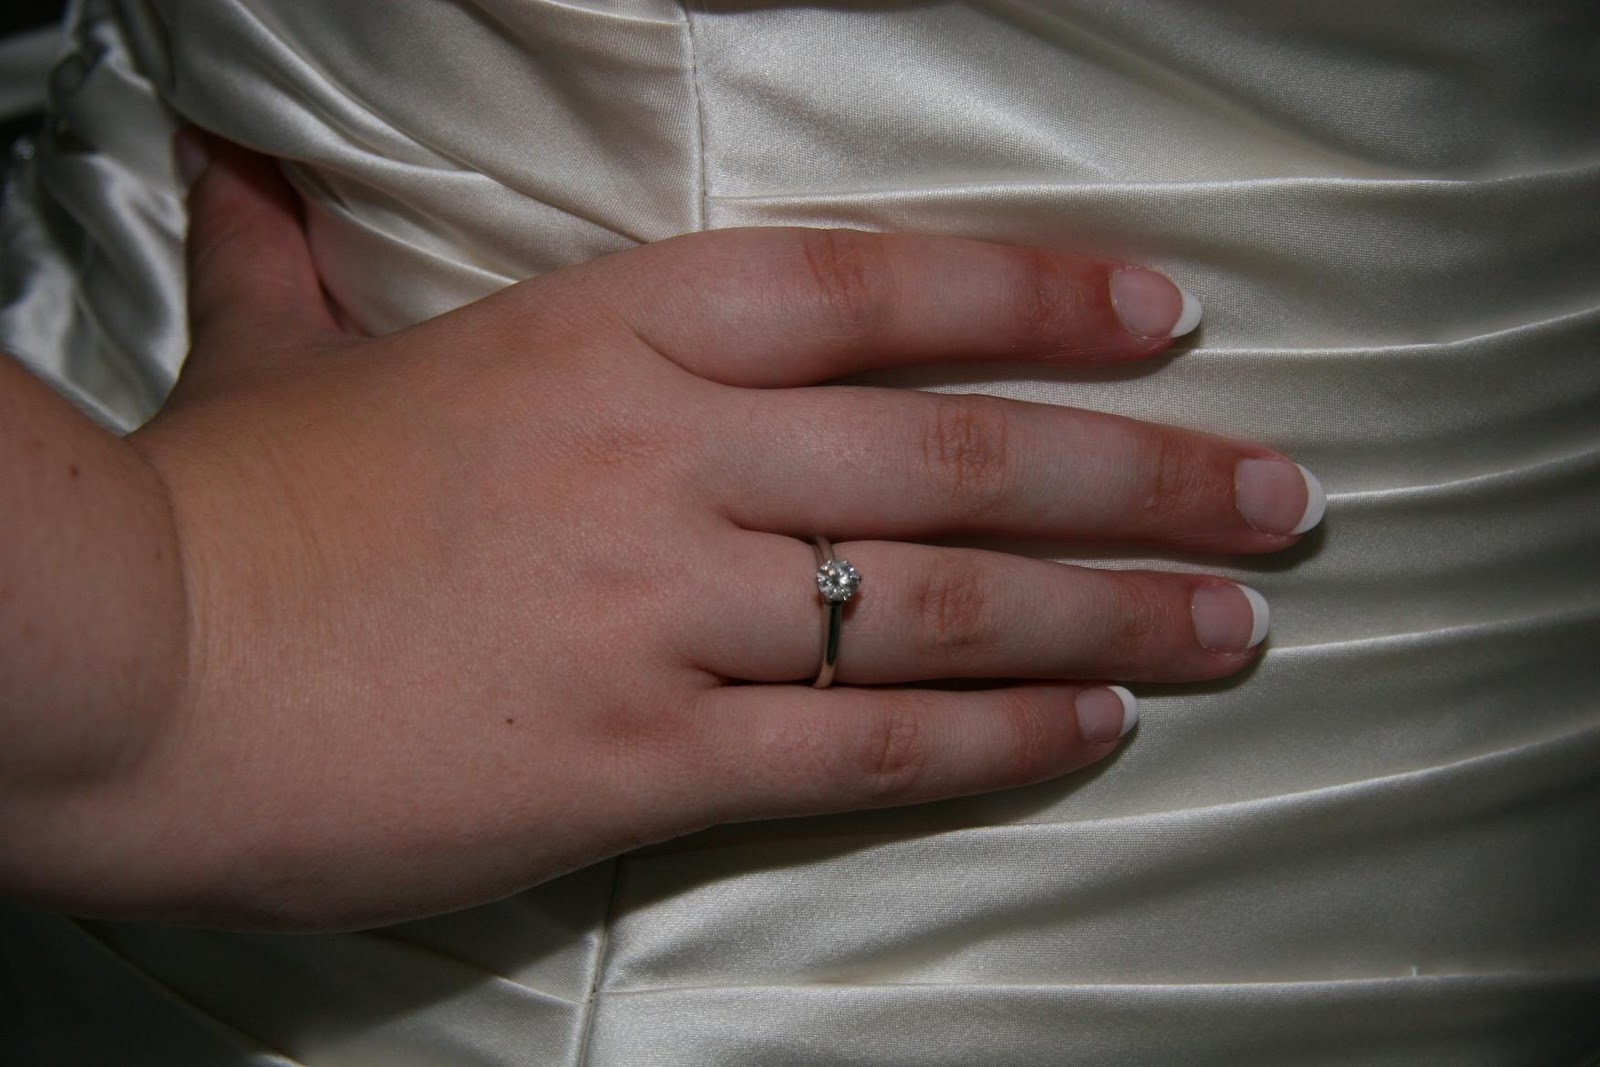 Engagement ring and wedding dress wedding dress. Image by balleyne